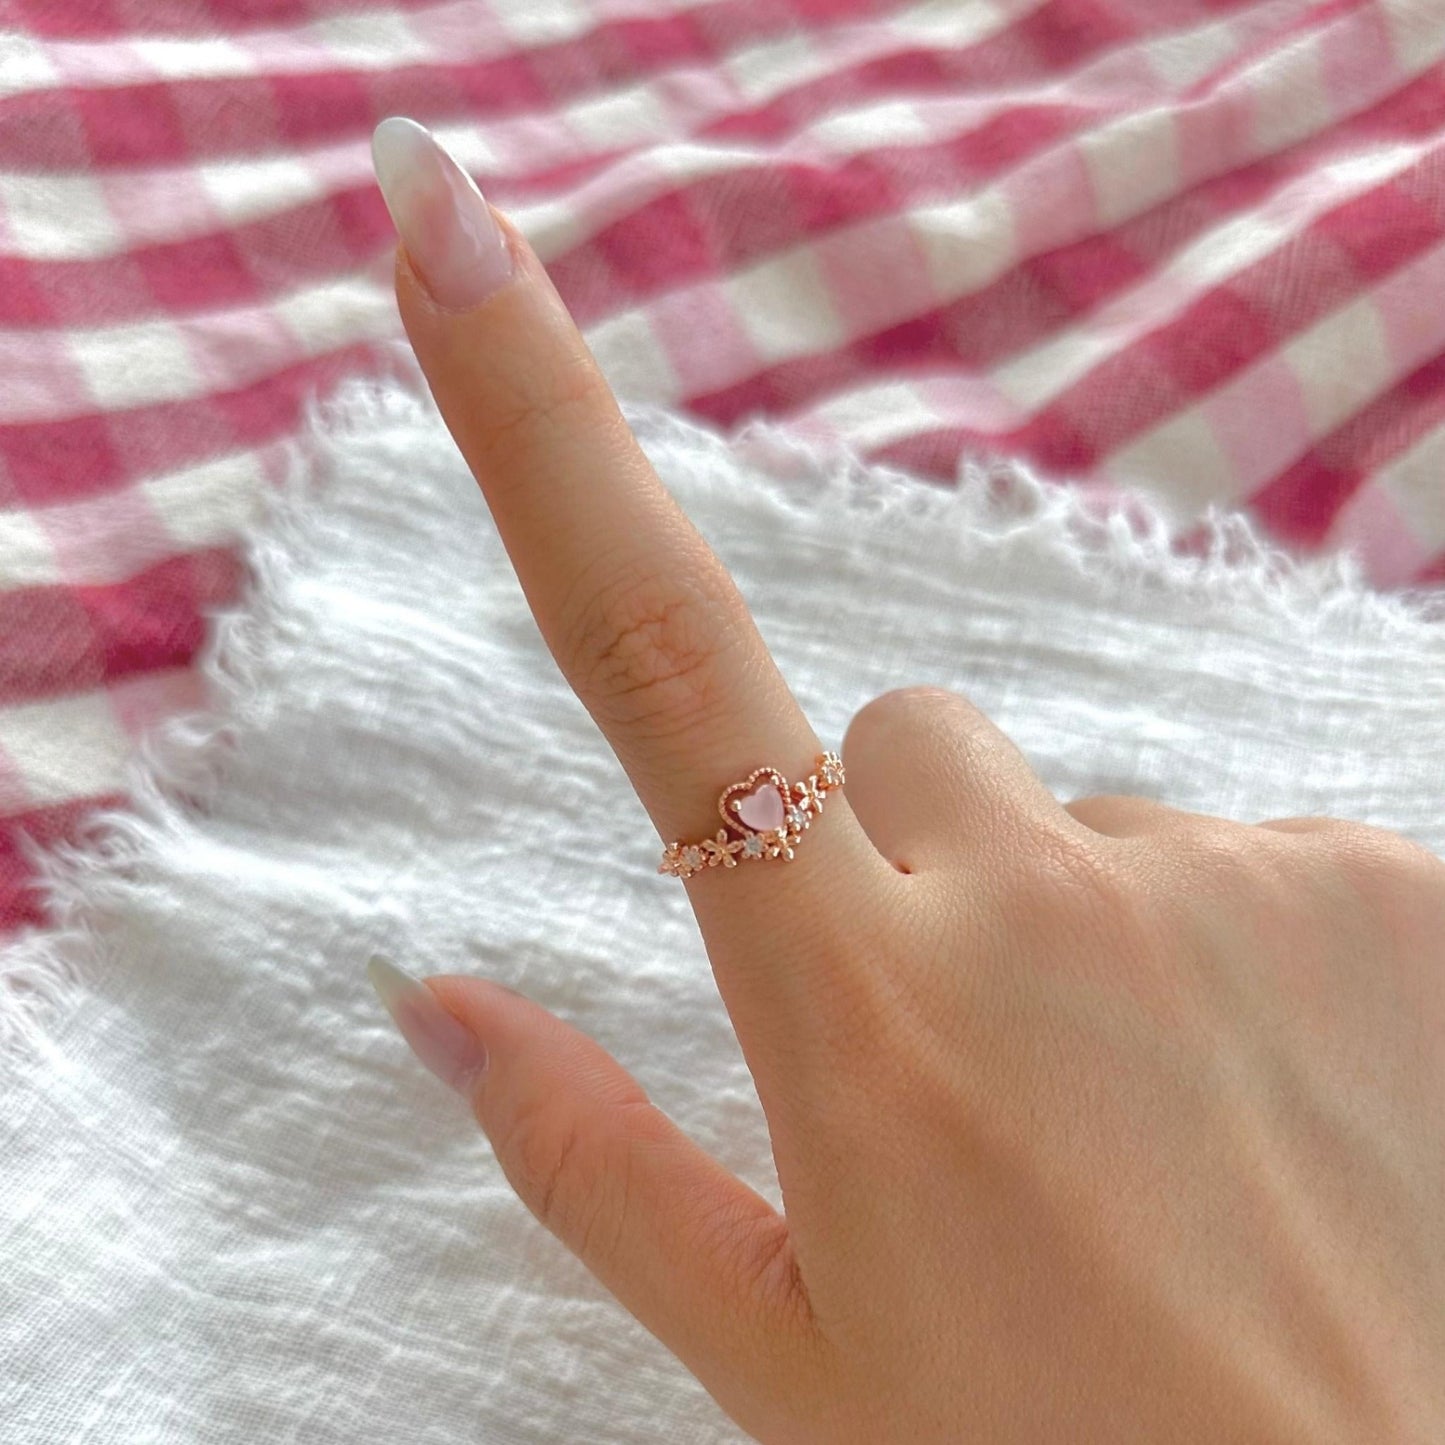 Pink Heart Ring - Bridget - Gold - Plated - Abbott Atelier